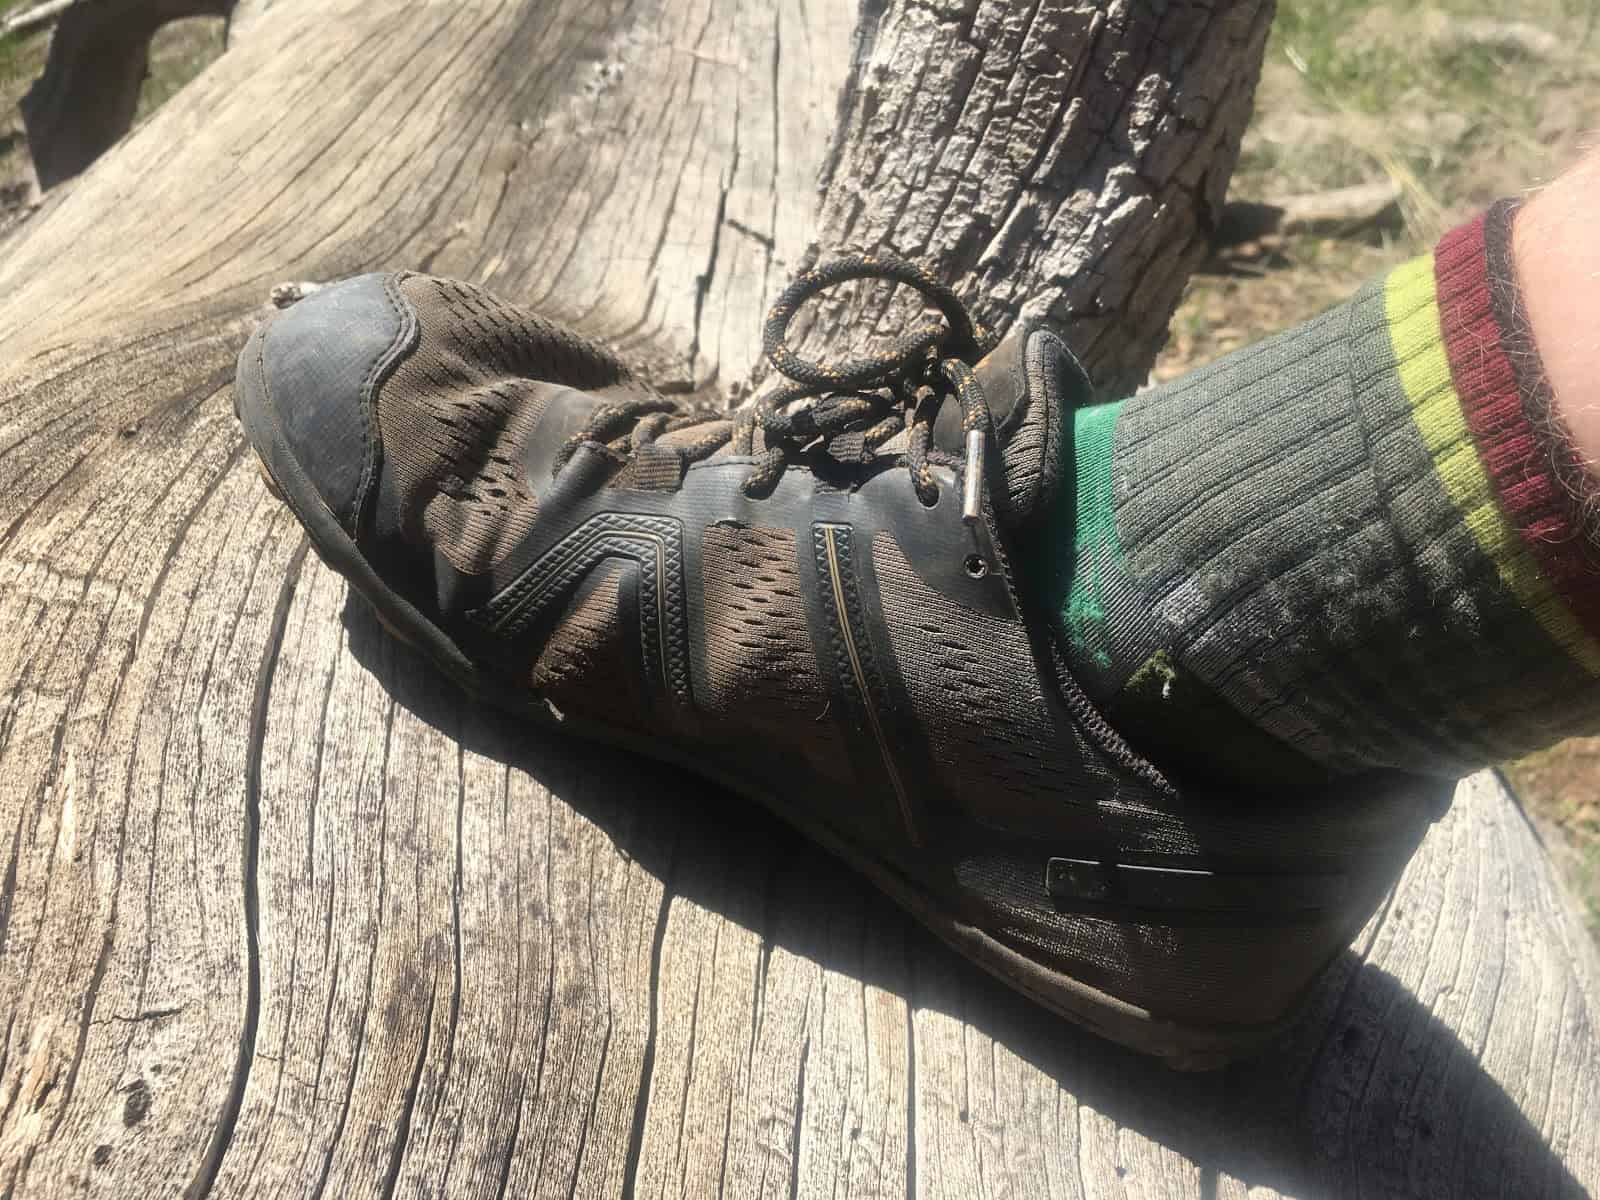 xero trail shoes